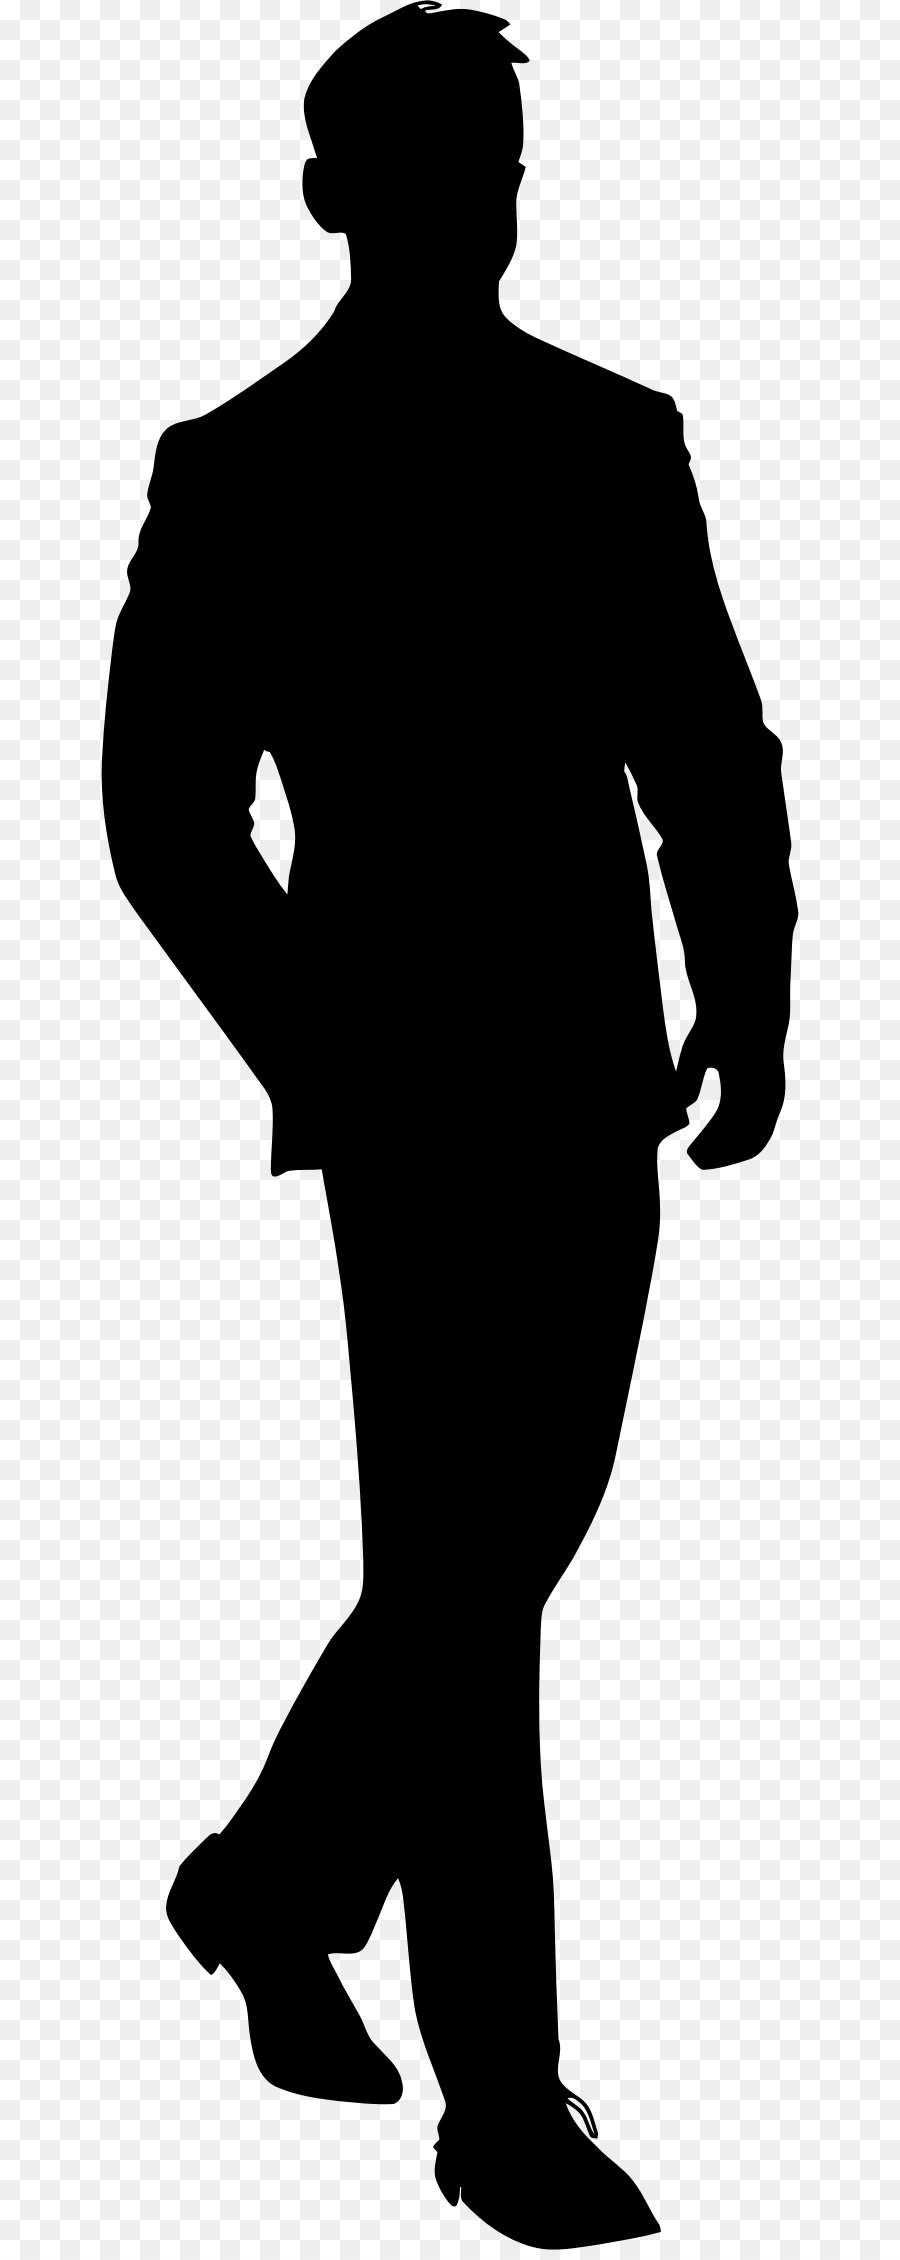 Suit Silhouette Clip art - man silhouette png download - 698*2250 - Free Transparent Suit png Download.